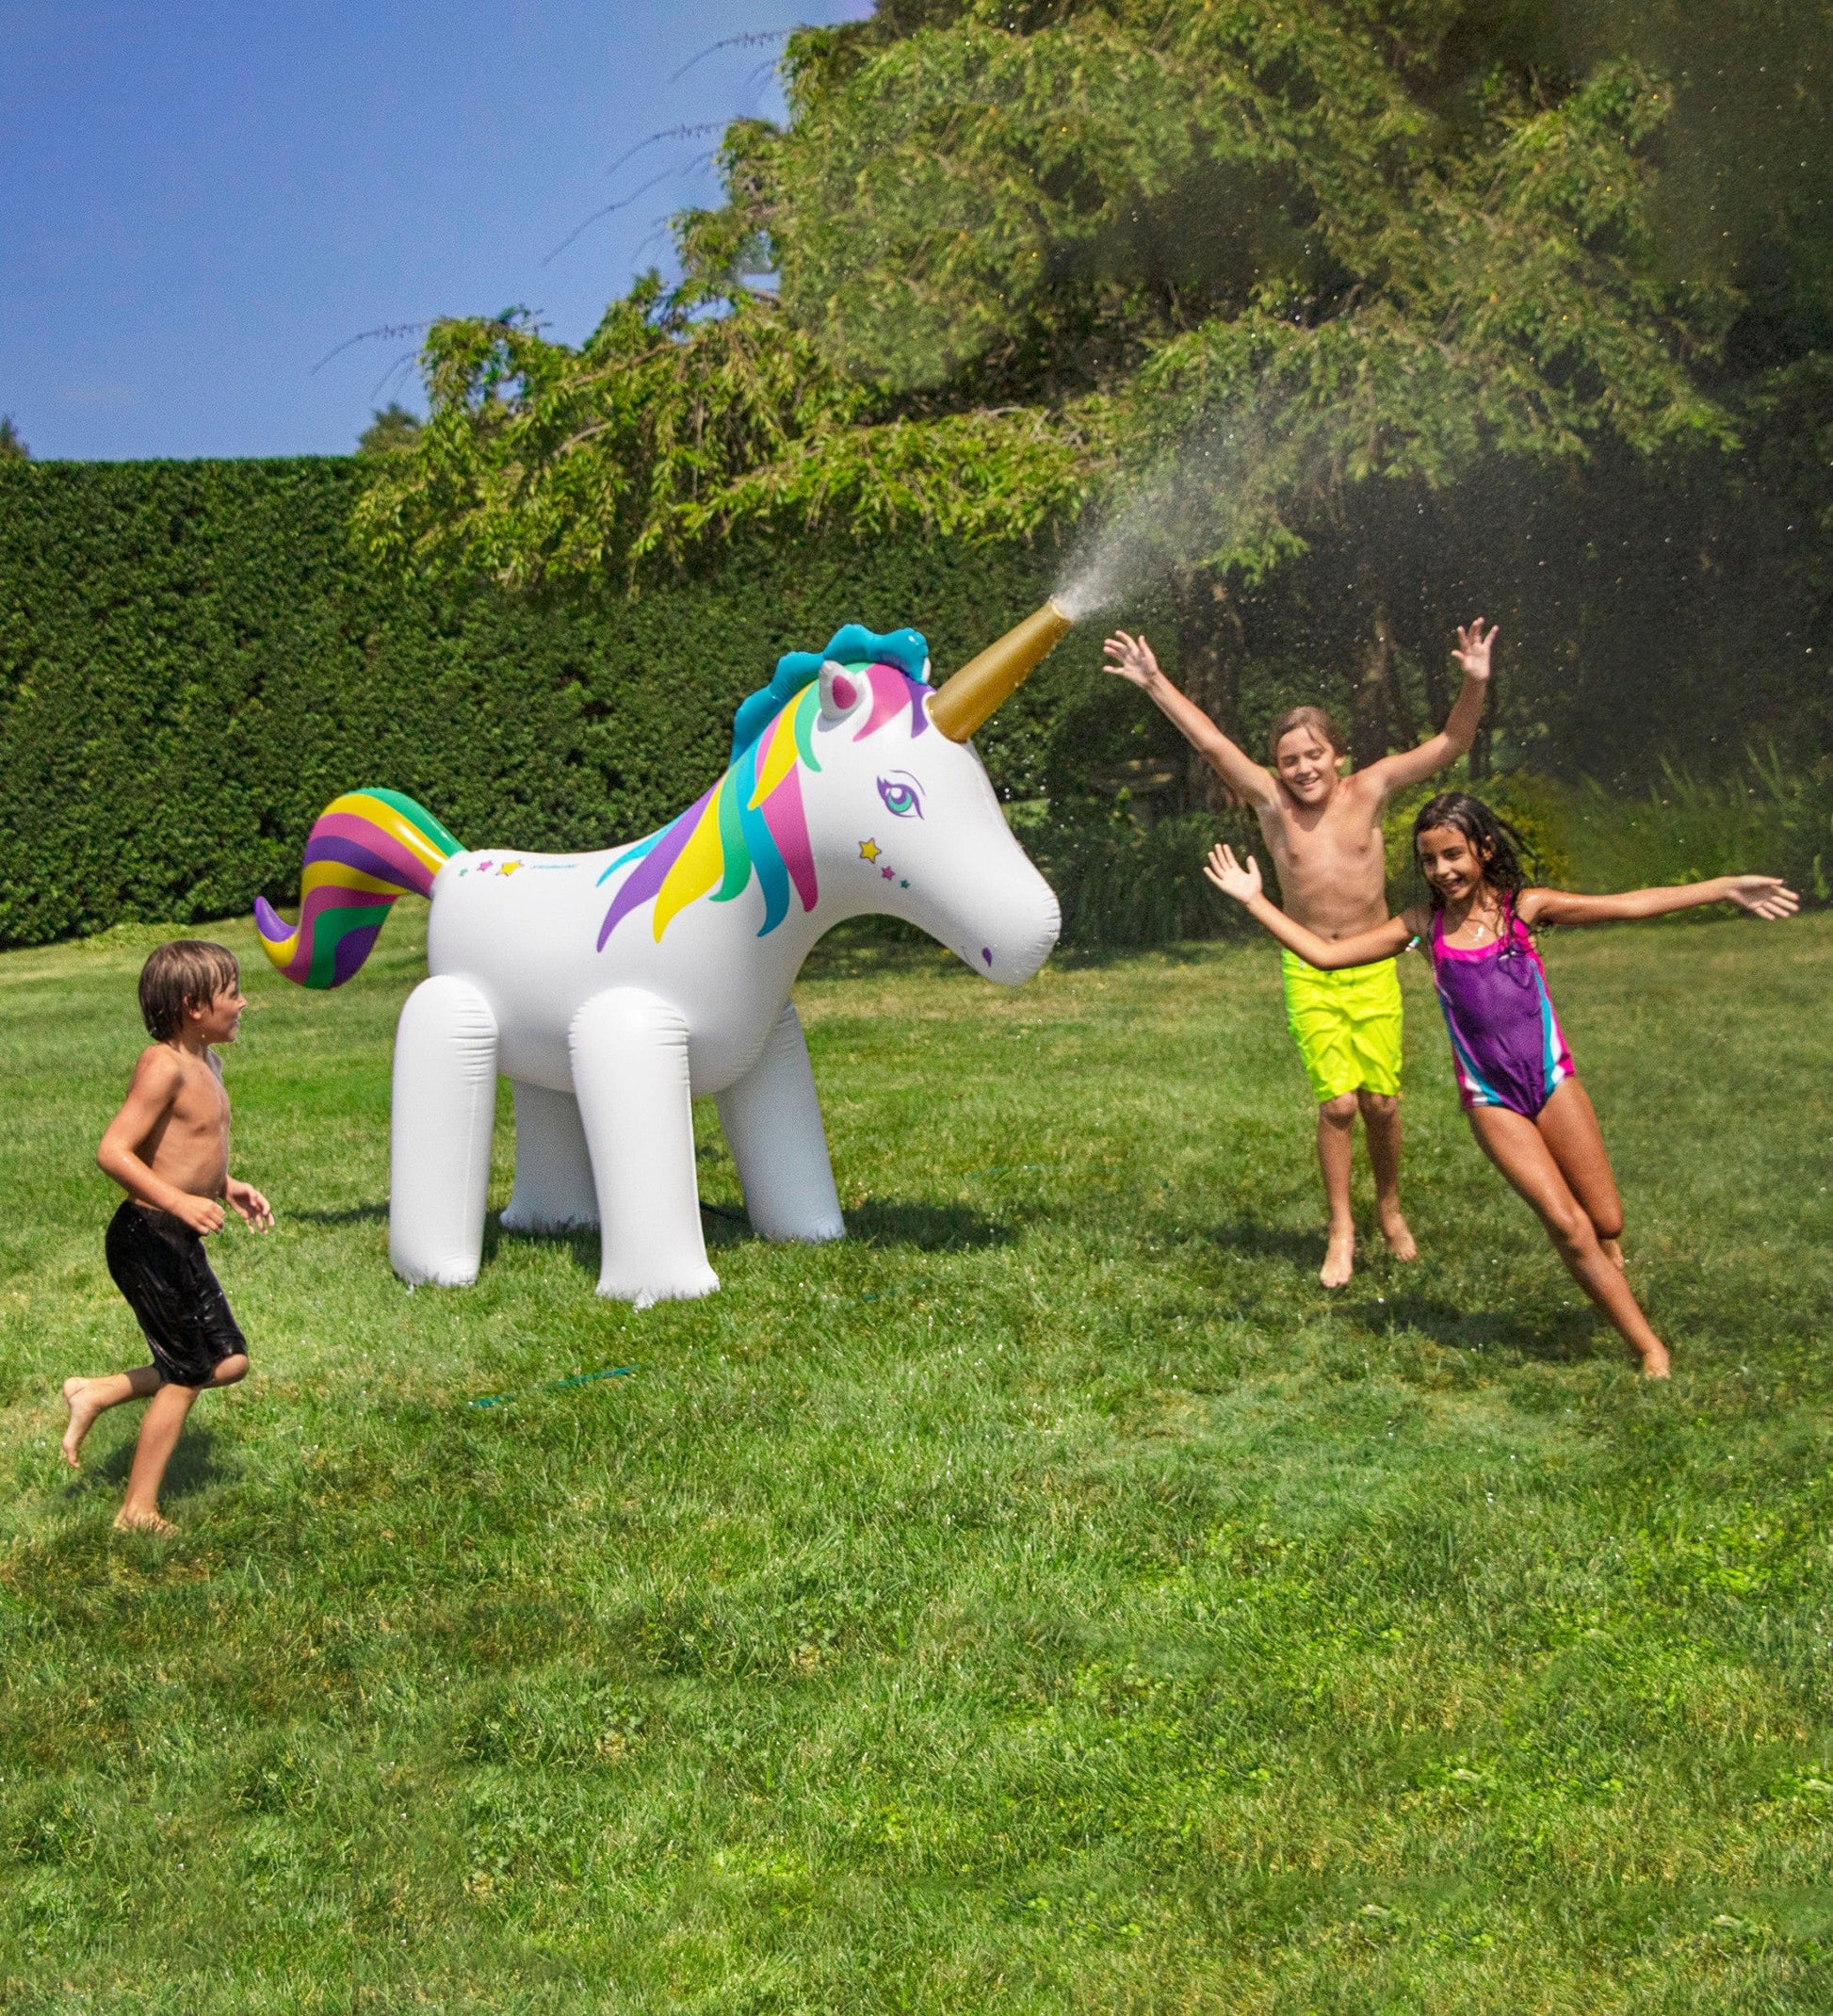 Gigantic 6-Foot Inflatable Unicorn Sprinkler